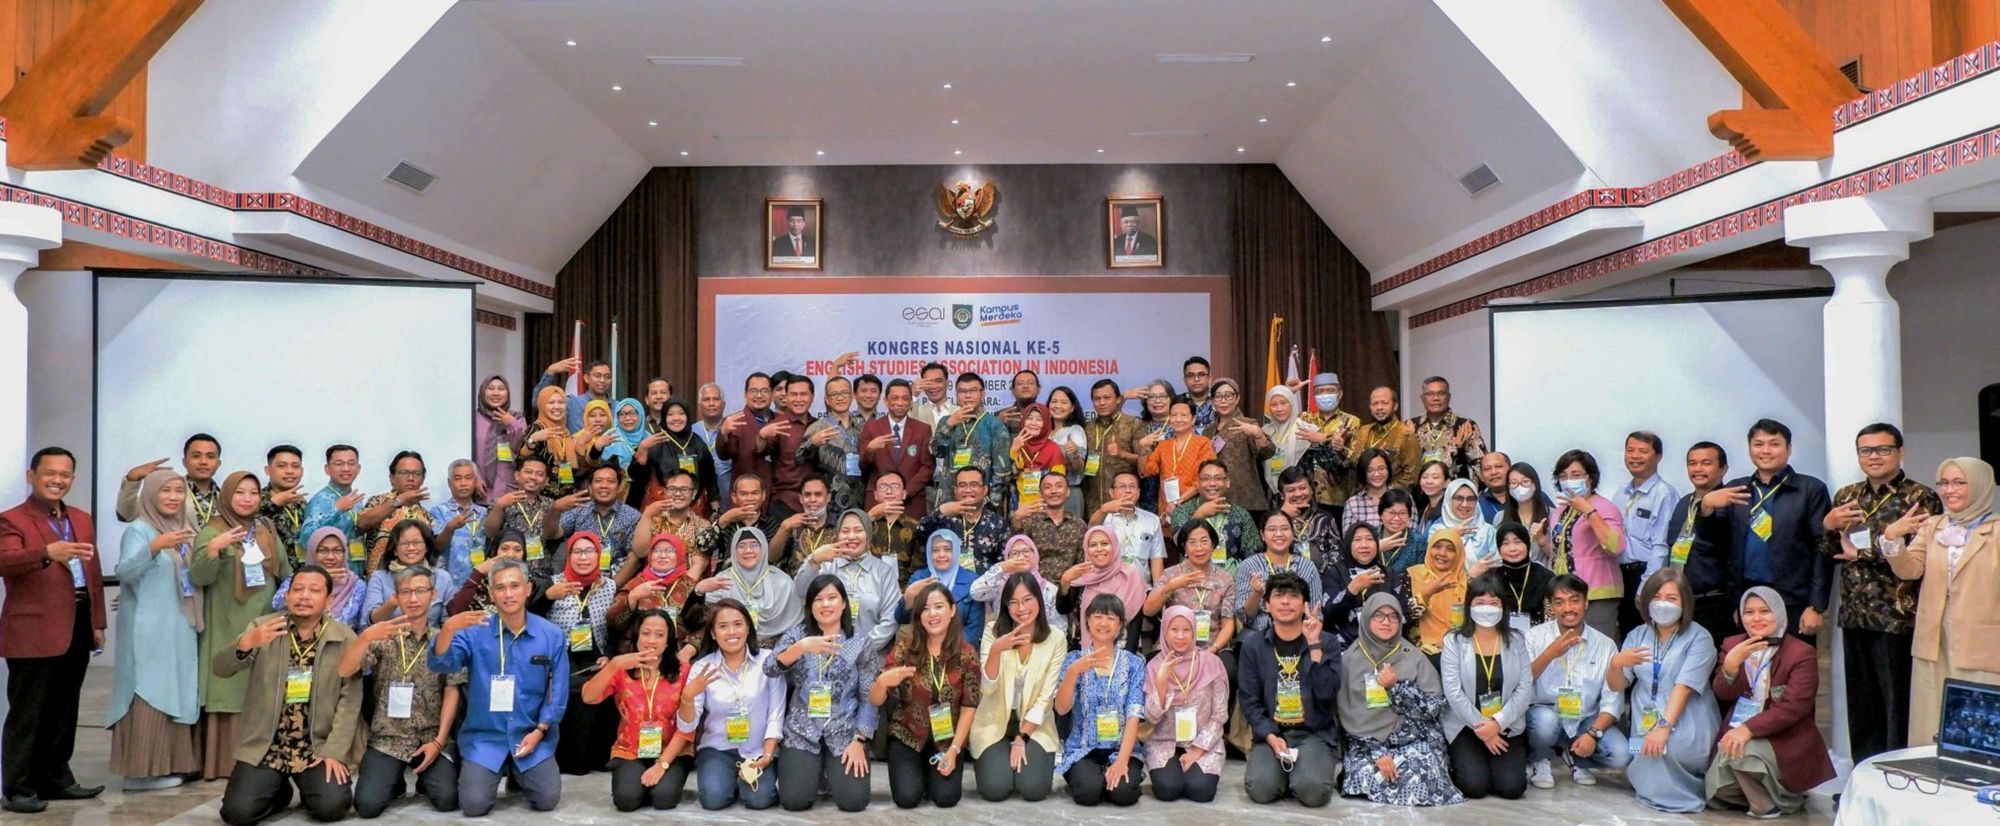 English Studies Association in Indonesia (ESAI)